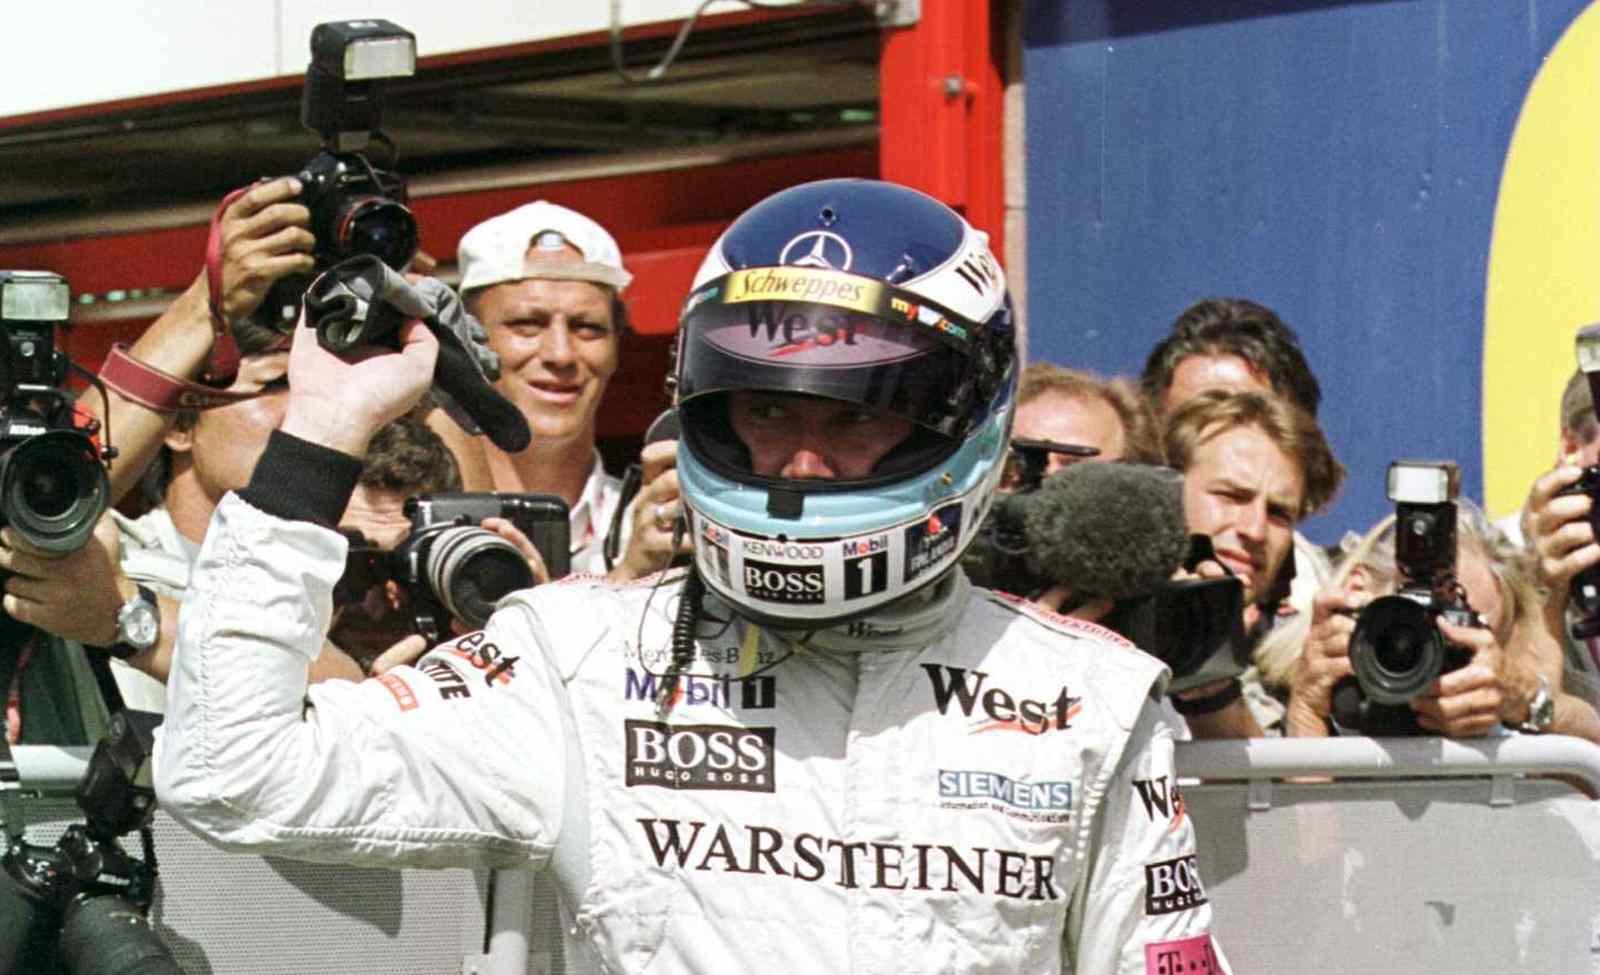 10 - Mika Hakkinen, 26 poles, a última delas com o McLaren MP4-15 no GP da Bélgica de 2000